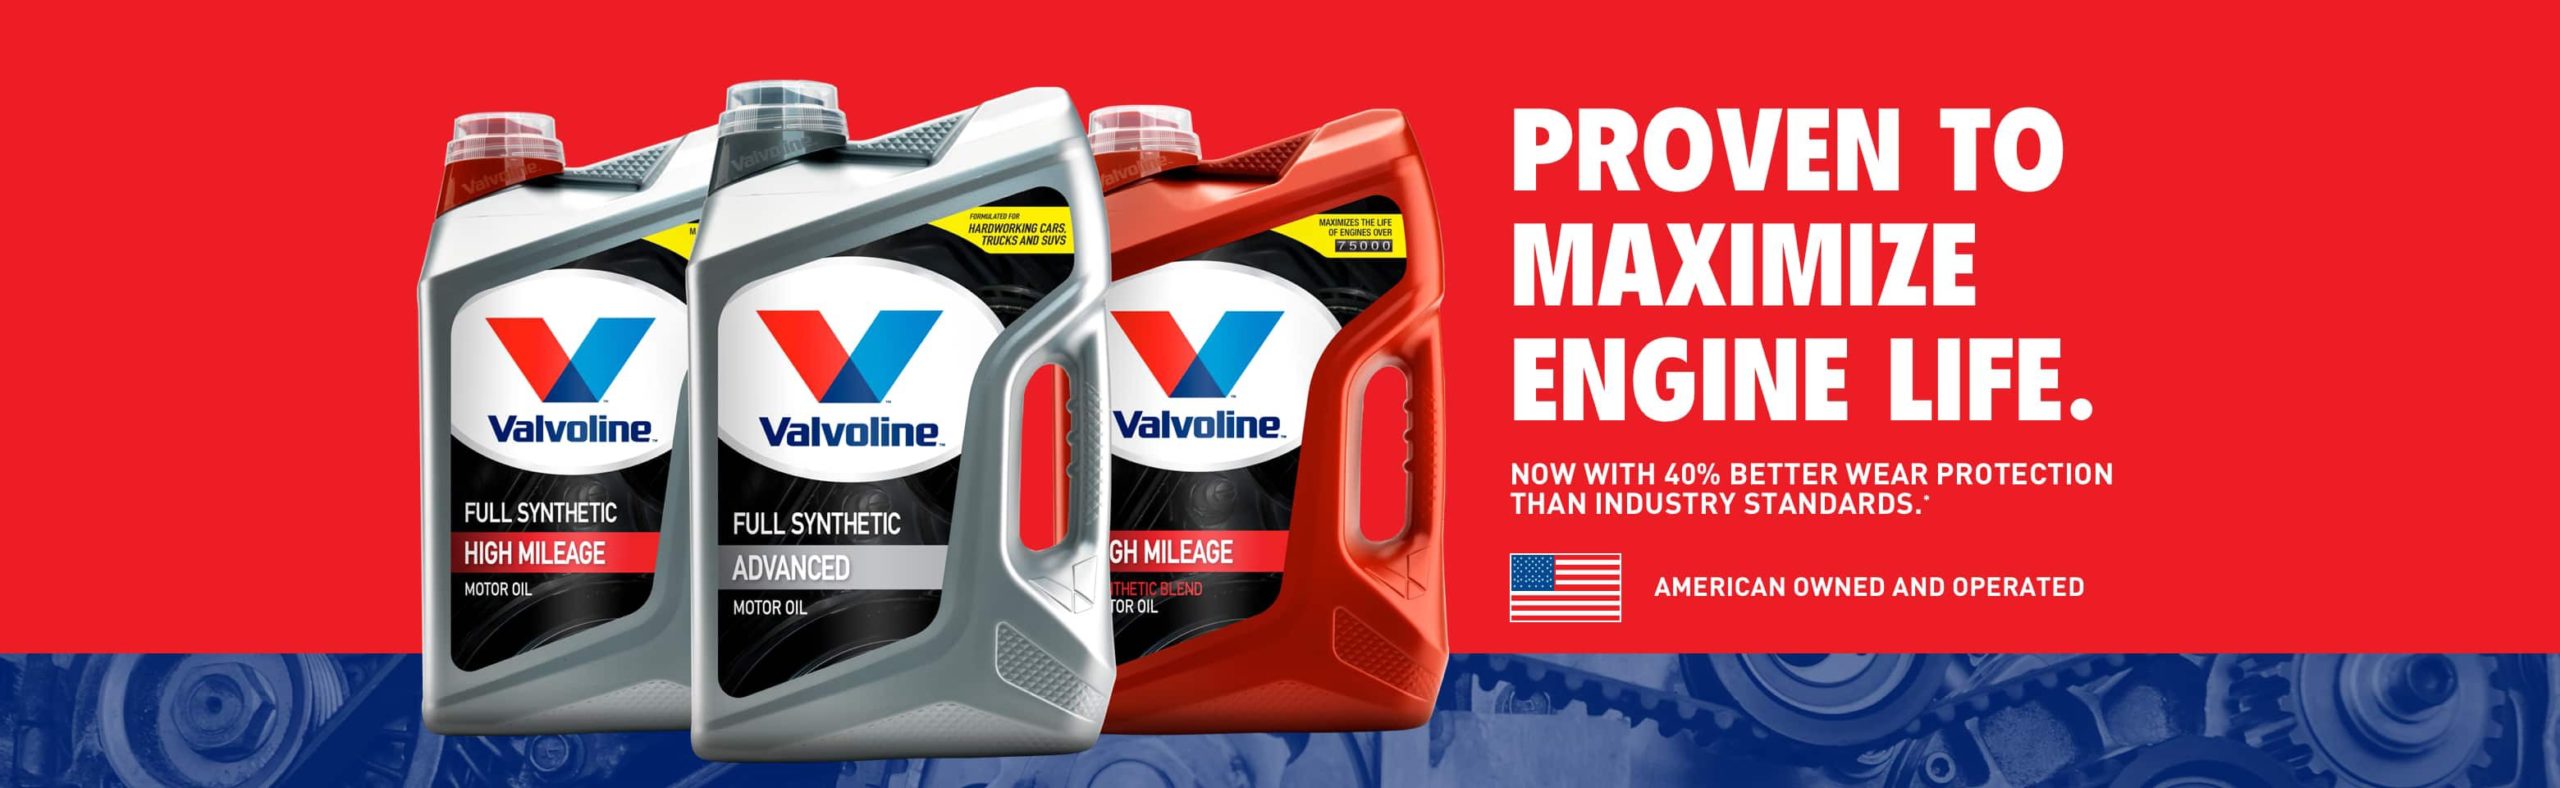 Valvoline Oil Proven To Maximize Engine Life NAPA Auto Parts